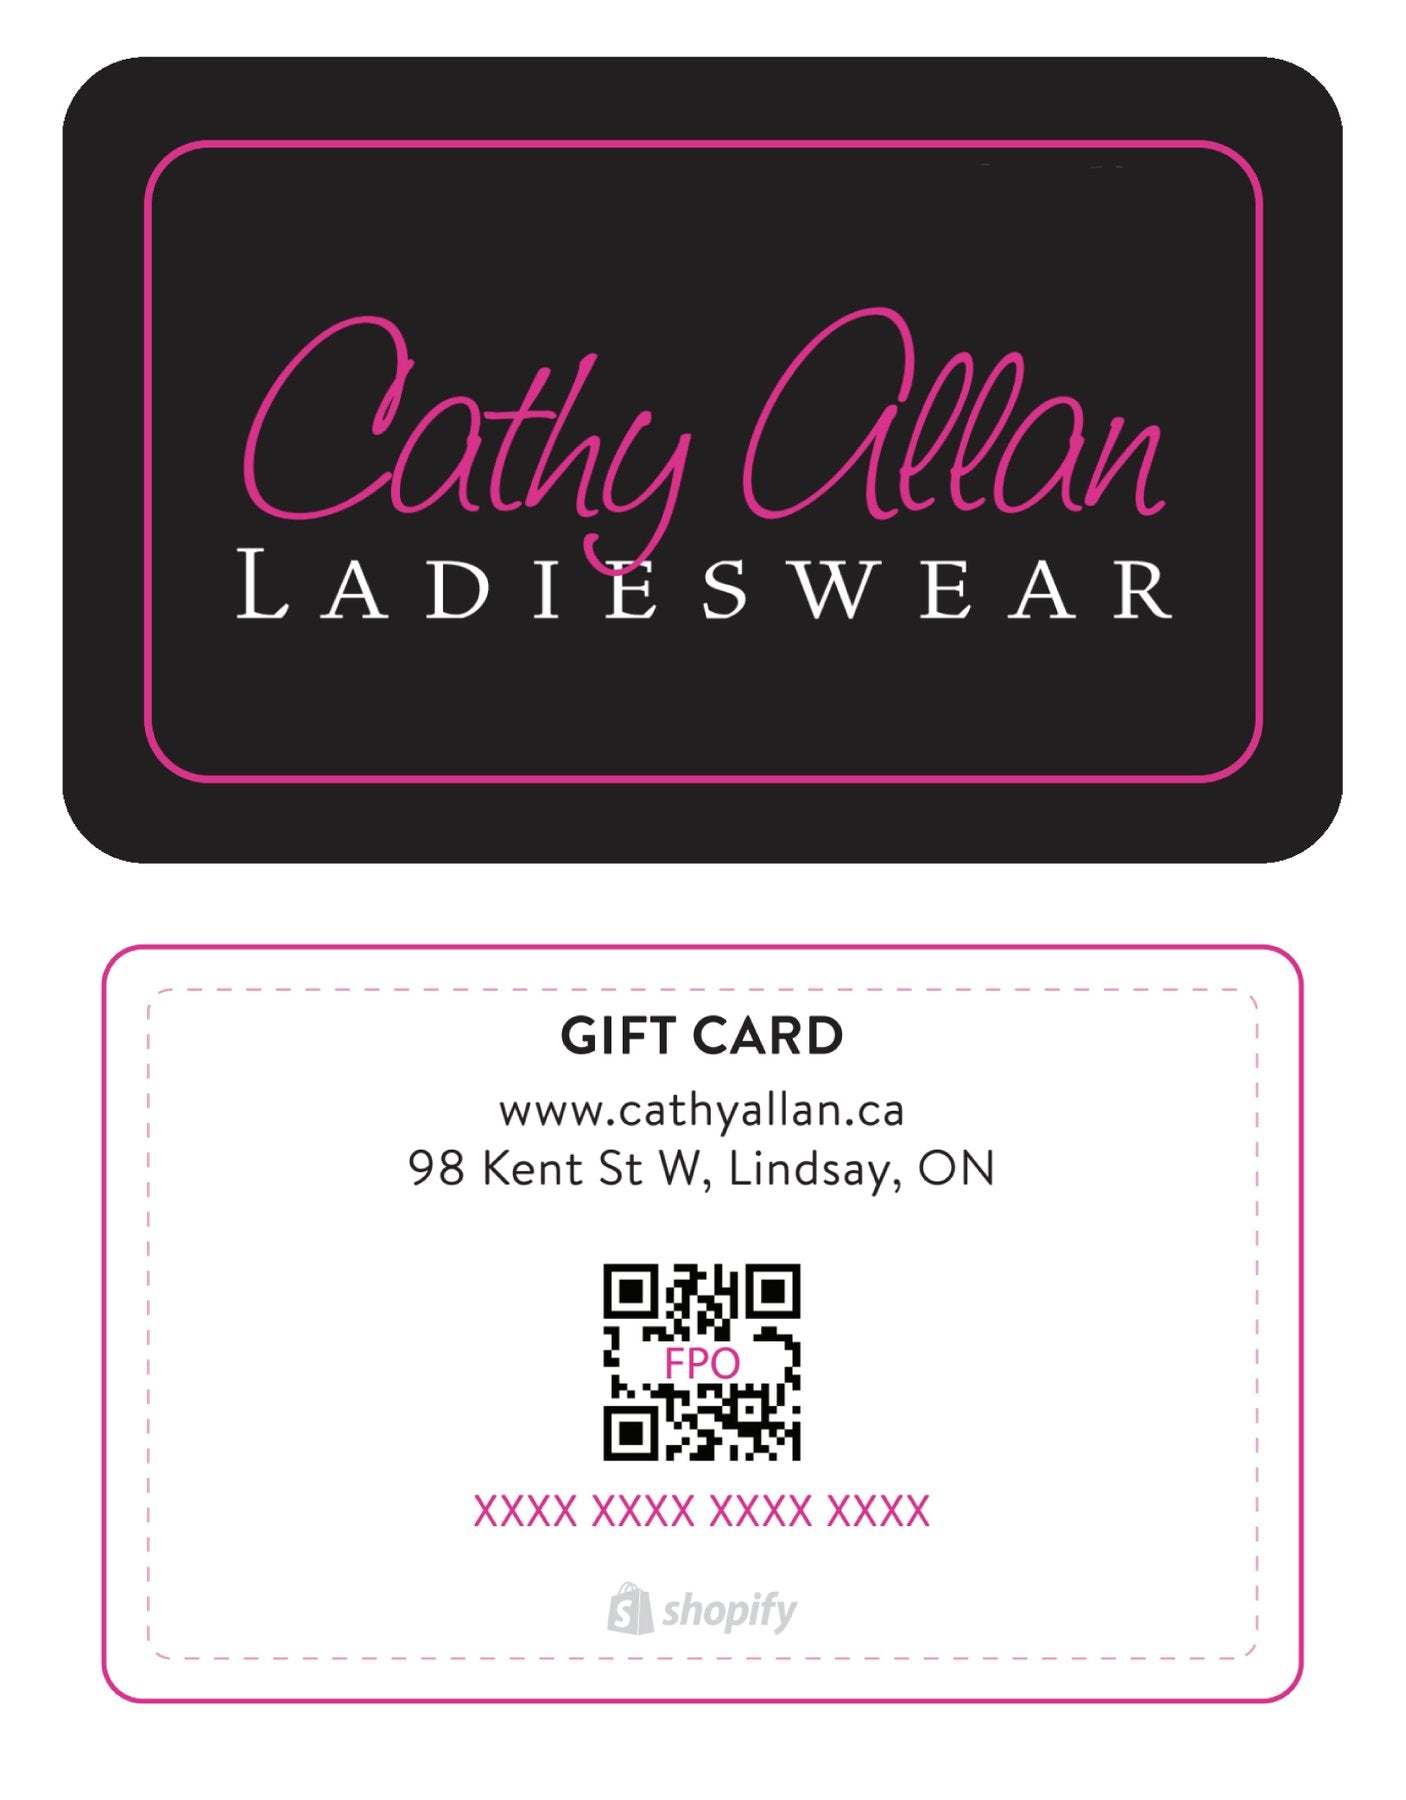 Cathy Allan Gift Card  Cathy Allan Ladieswear